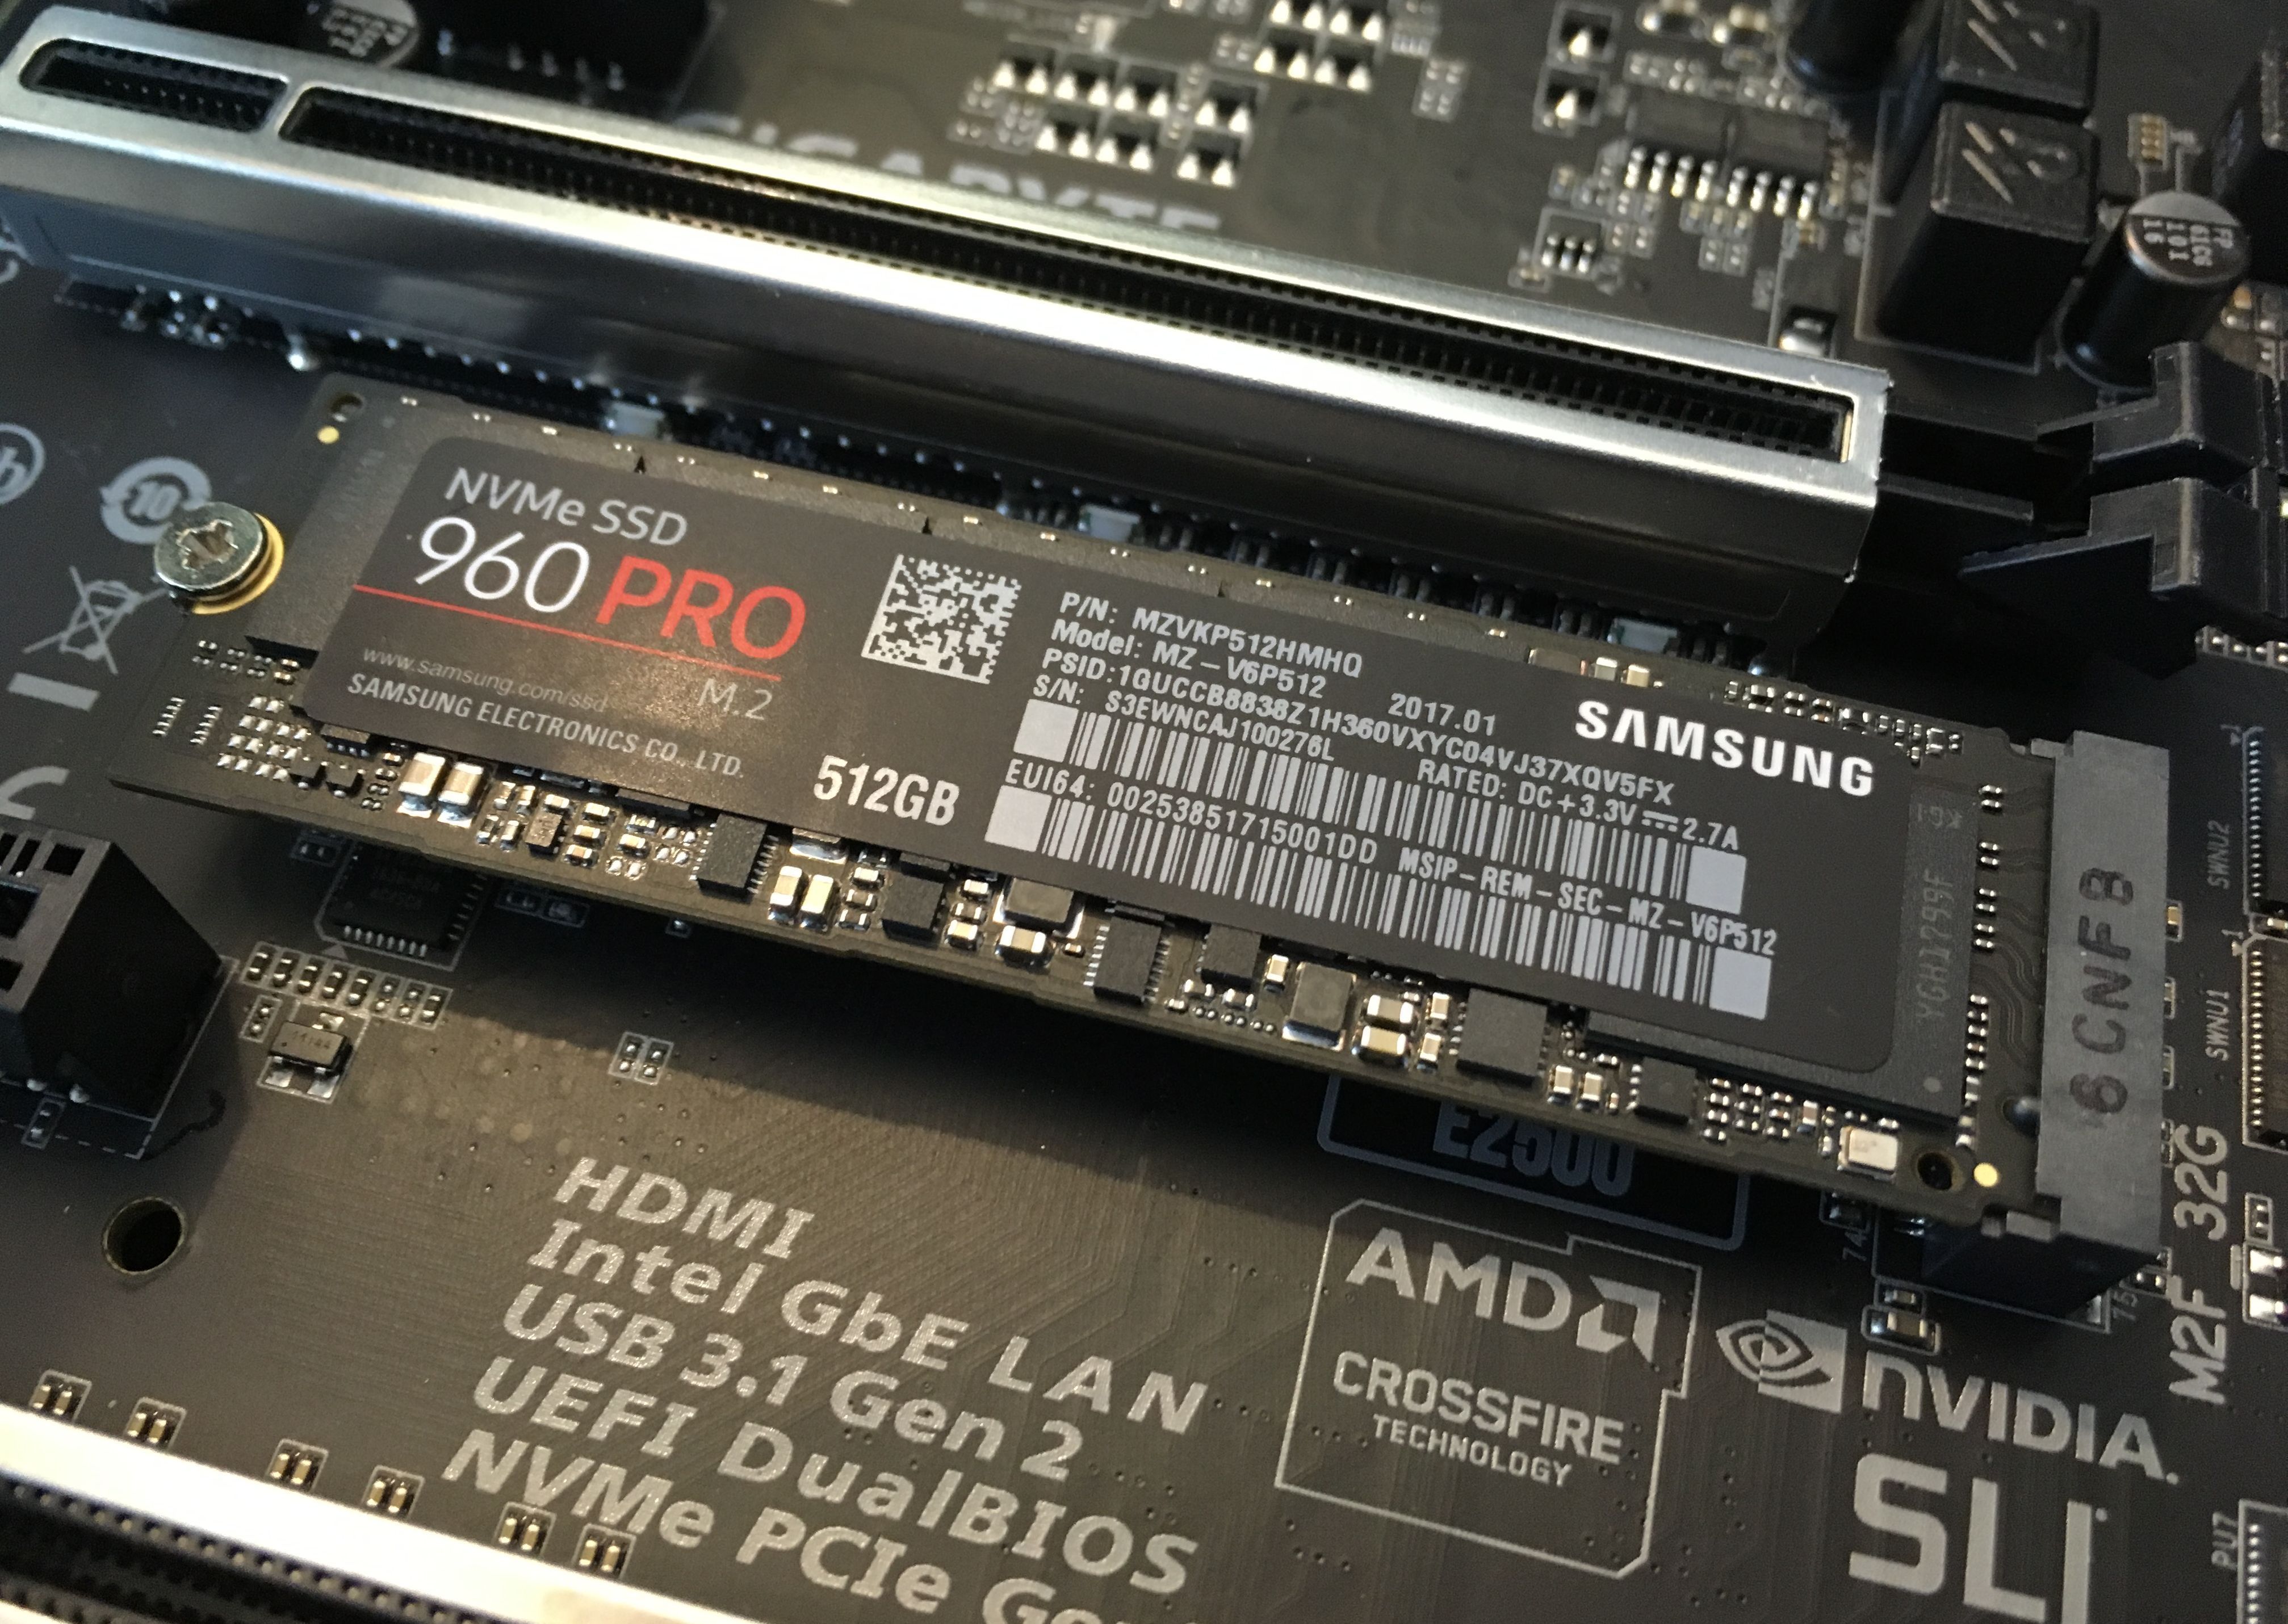 GameStop 1TB SSD with Heatsink PCIe Gen4 NVMe M.2 High-Performance